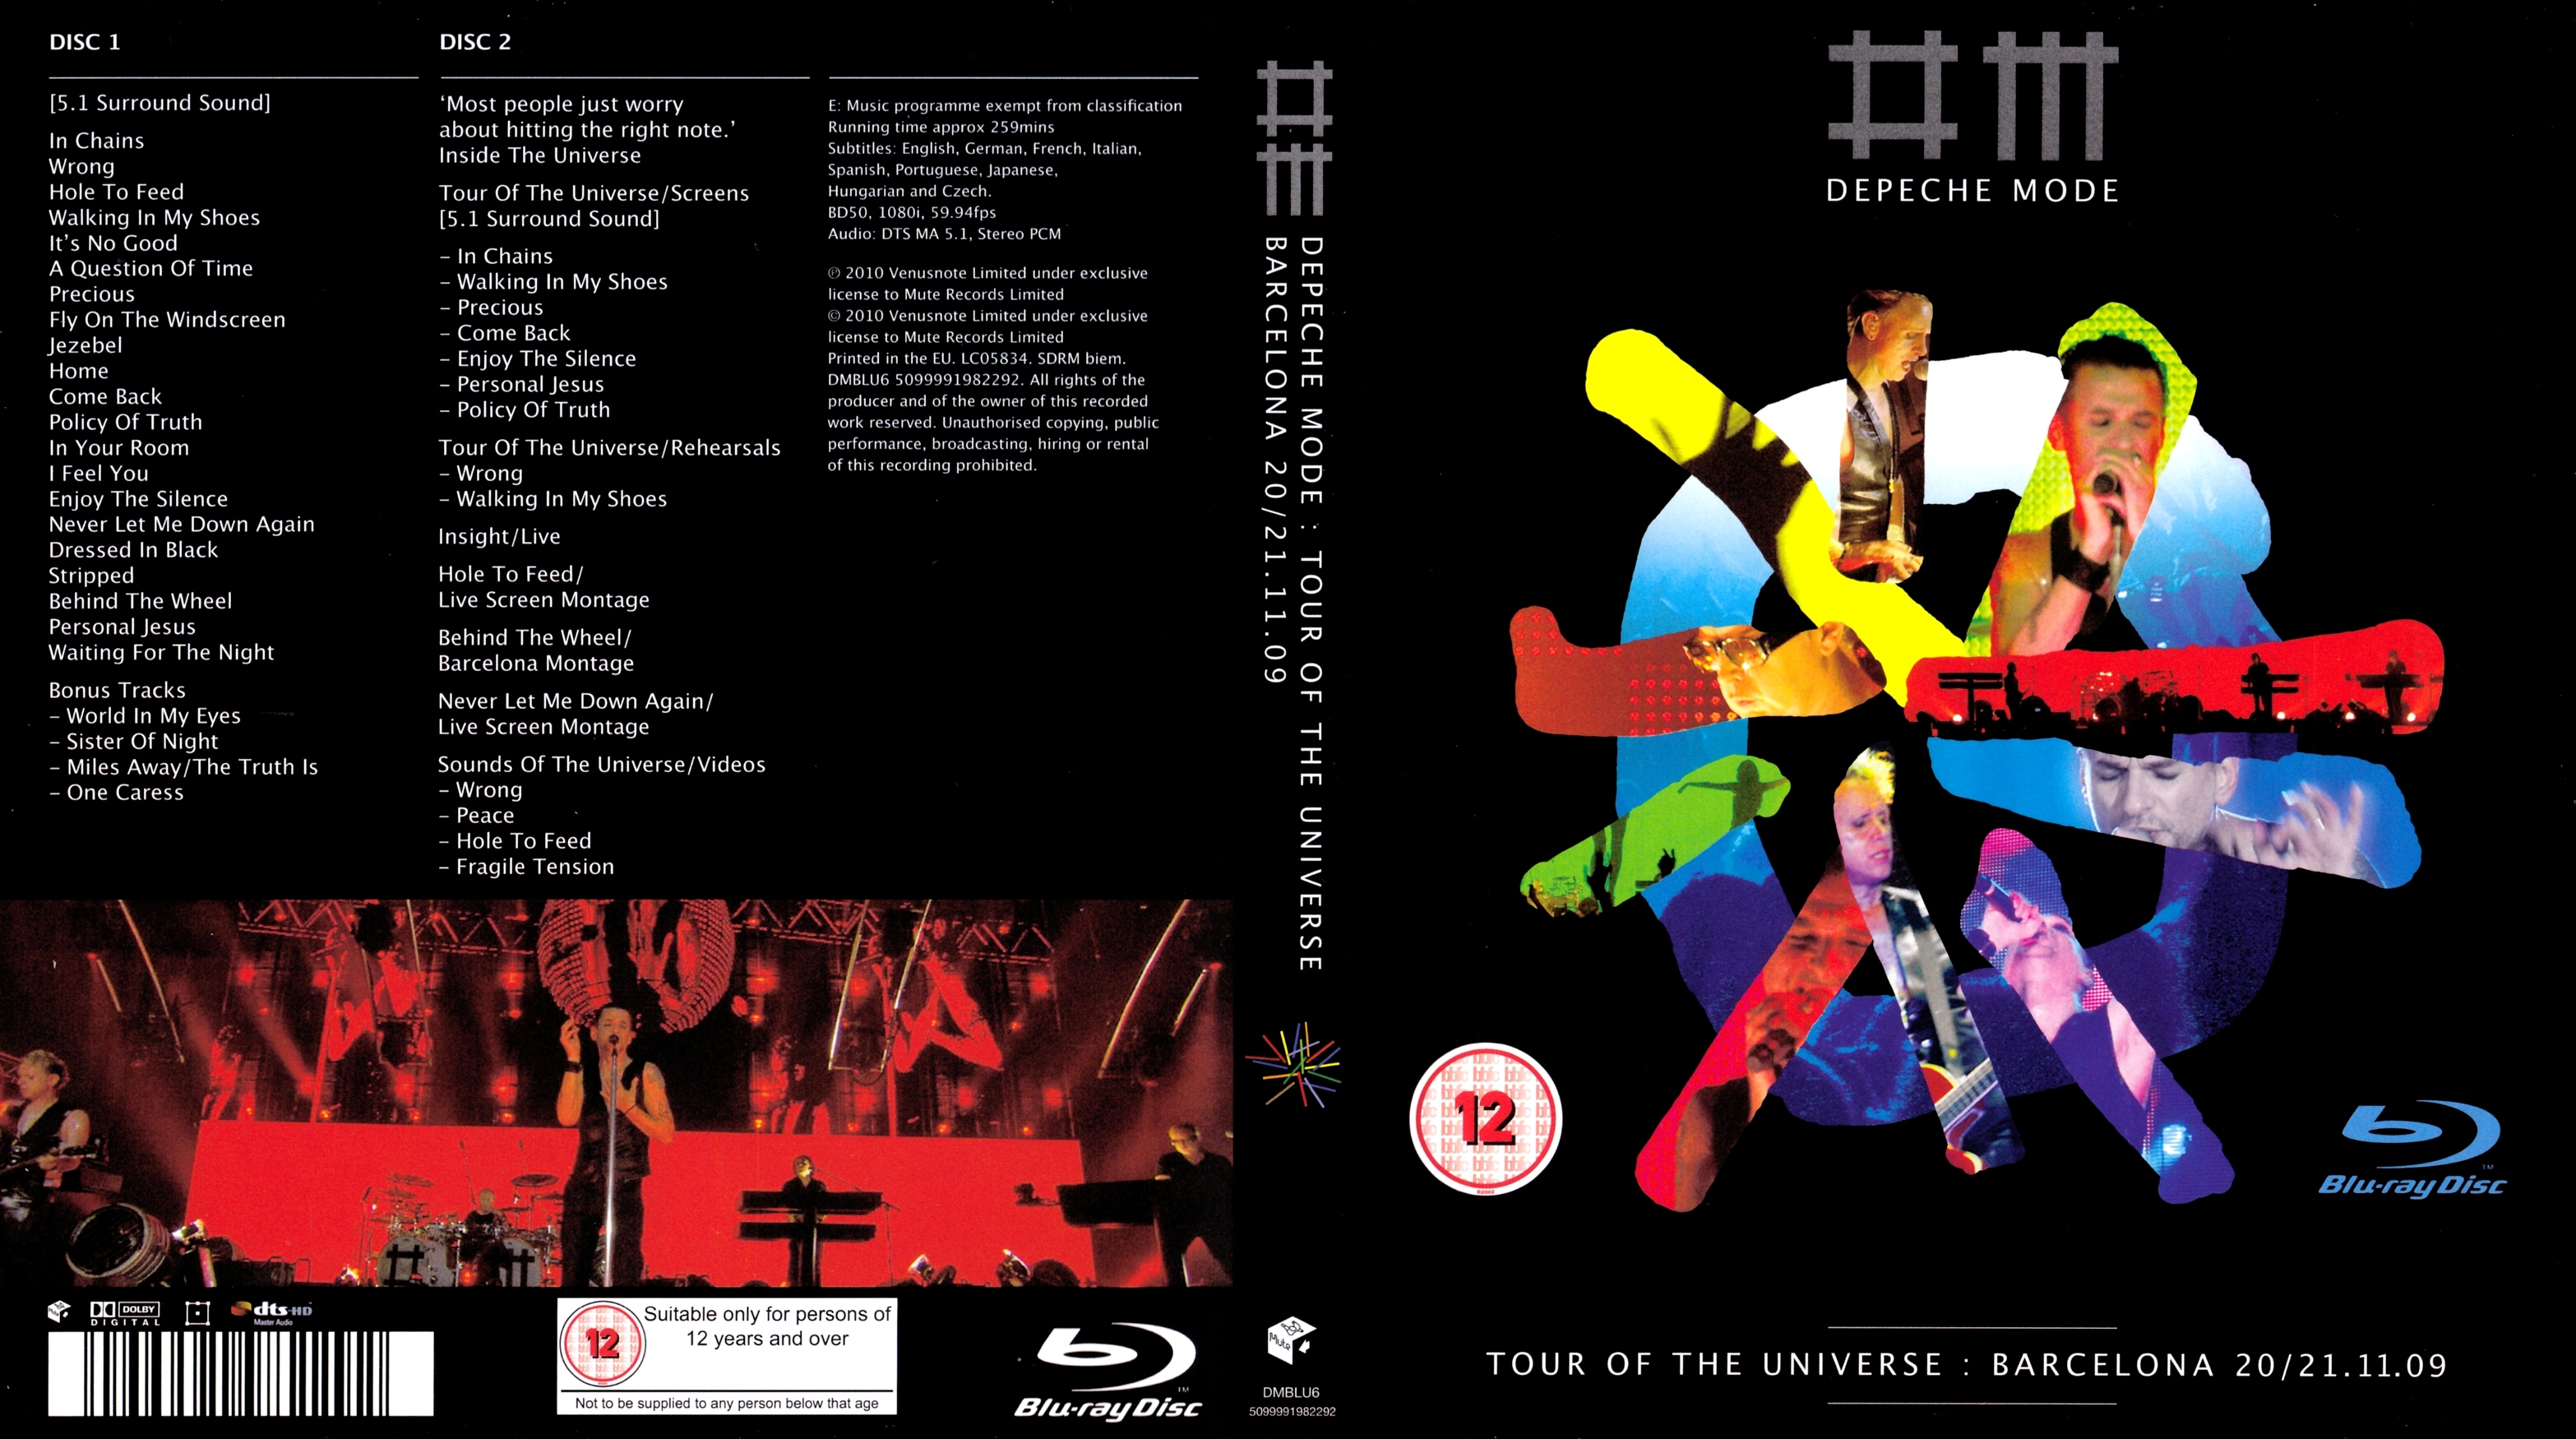 Jaquette DVD Depeche Mode - Tour of universe Barcelona 2009 (BLU-RAY)